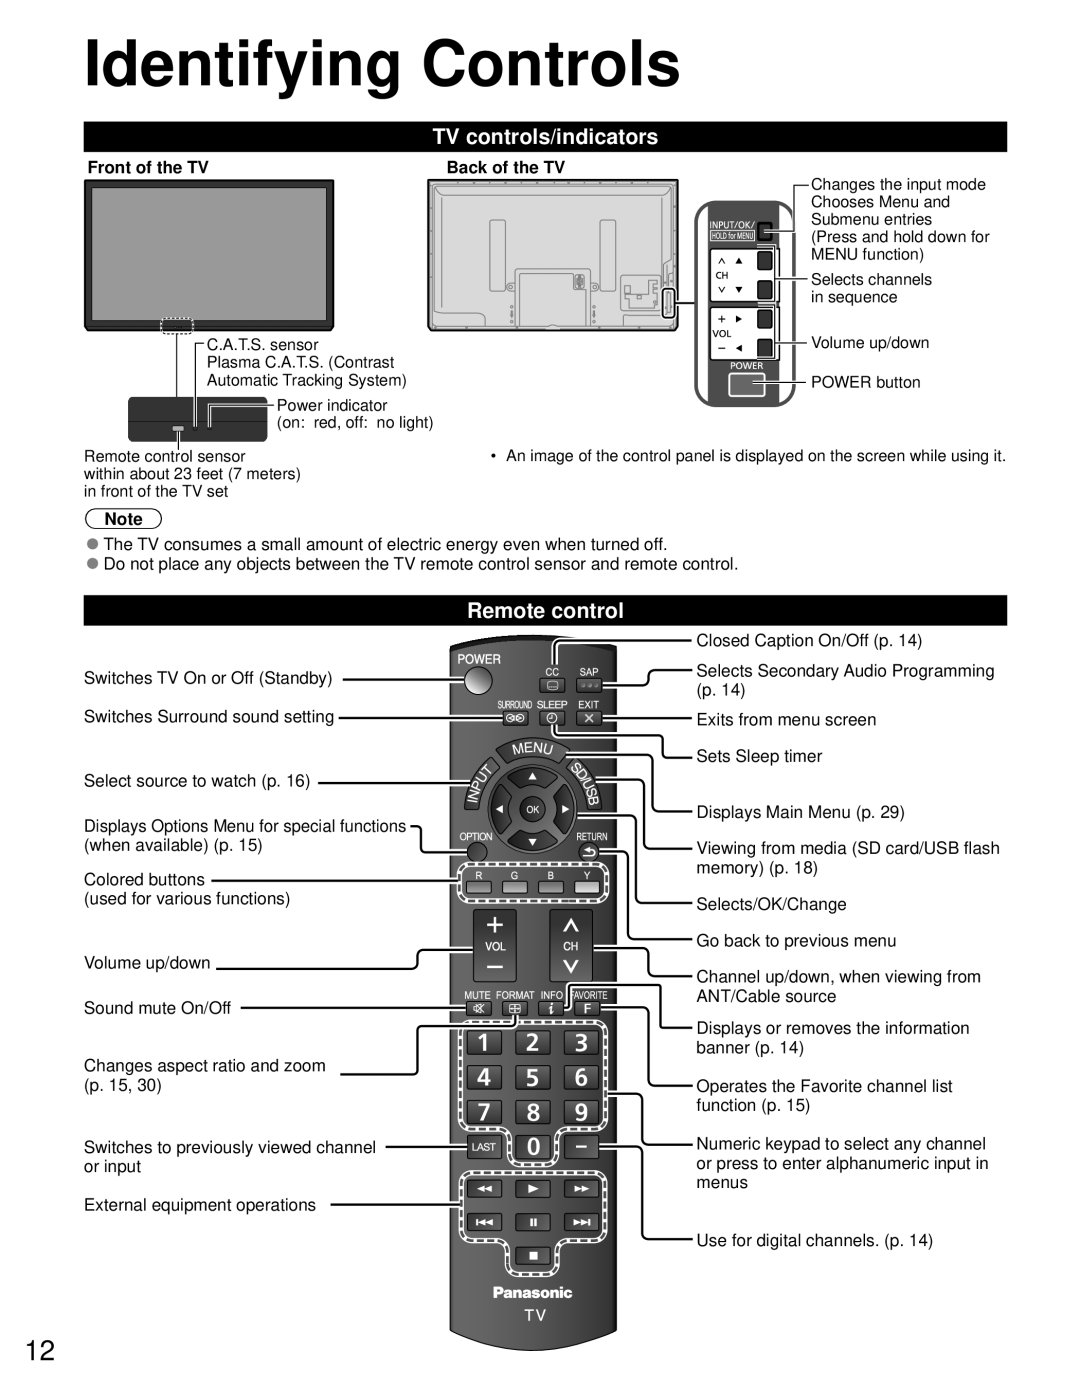 Panasonic TC-P50U50 owner manual Identifying Controls, TV controls/indicators, Remote control, Front of the TV 